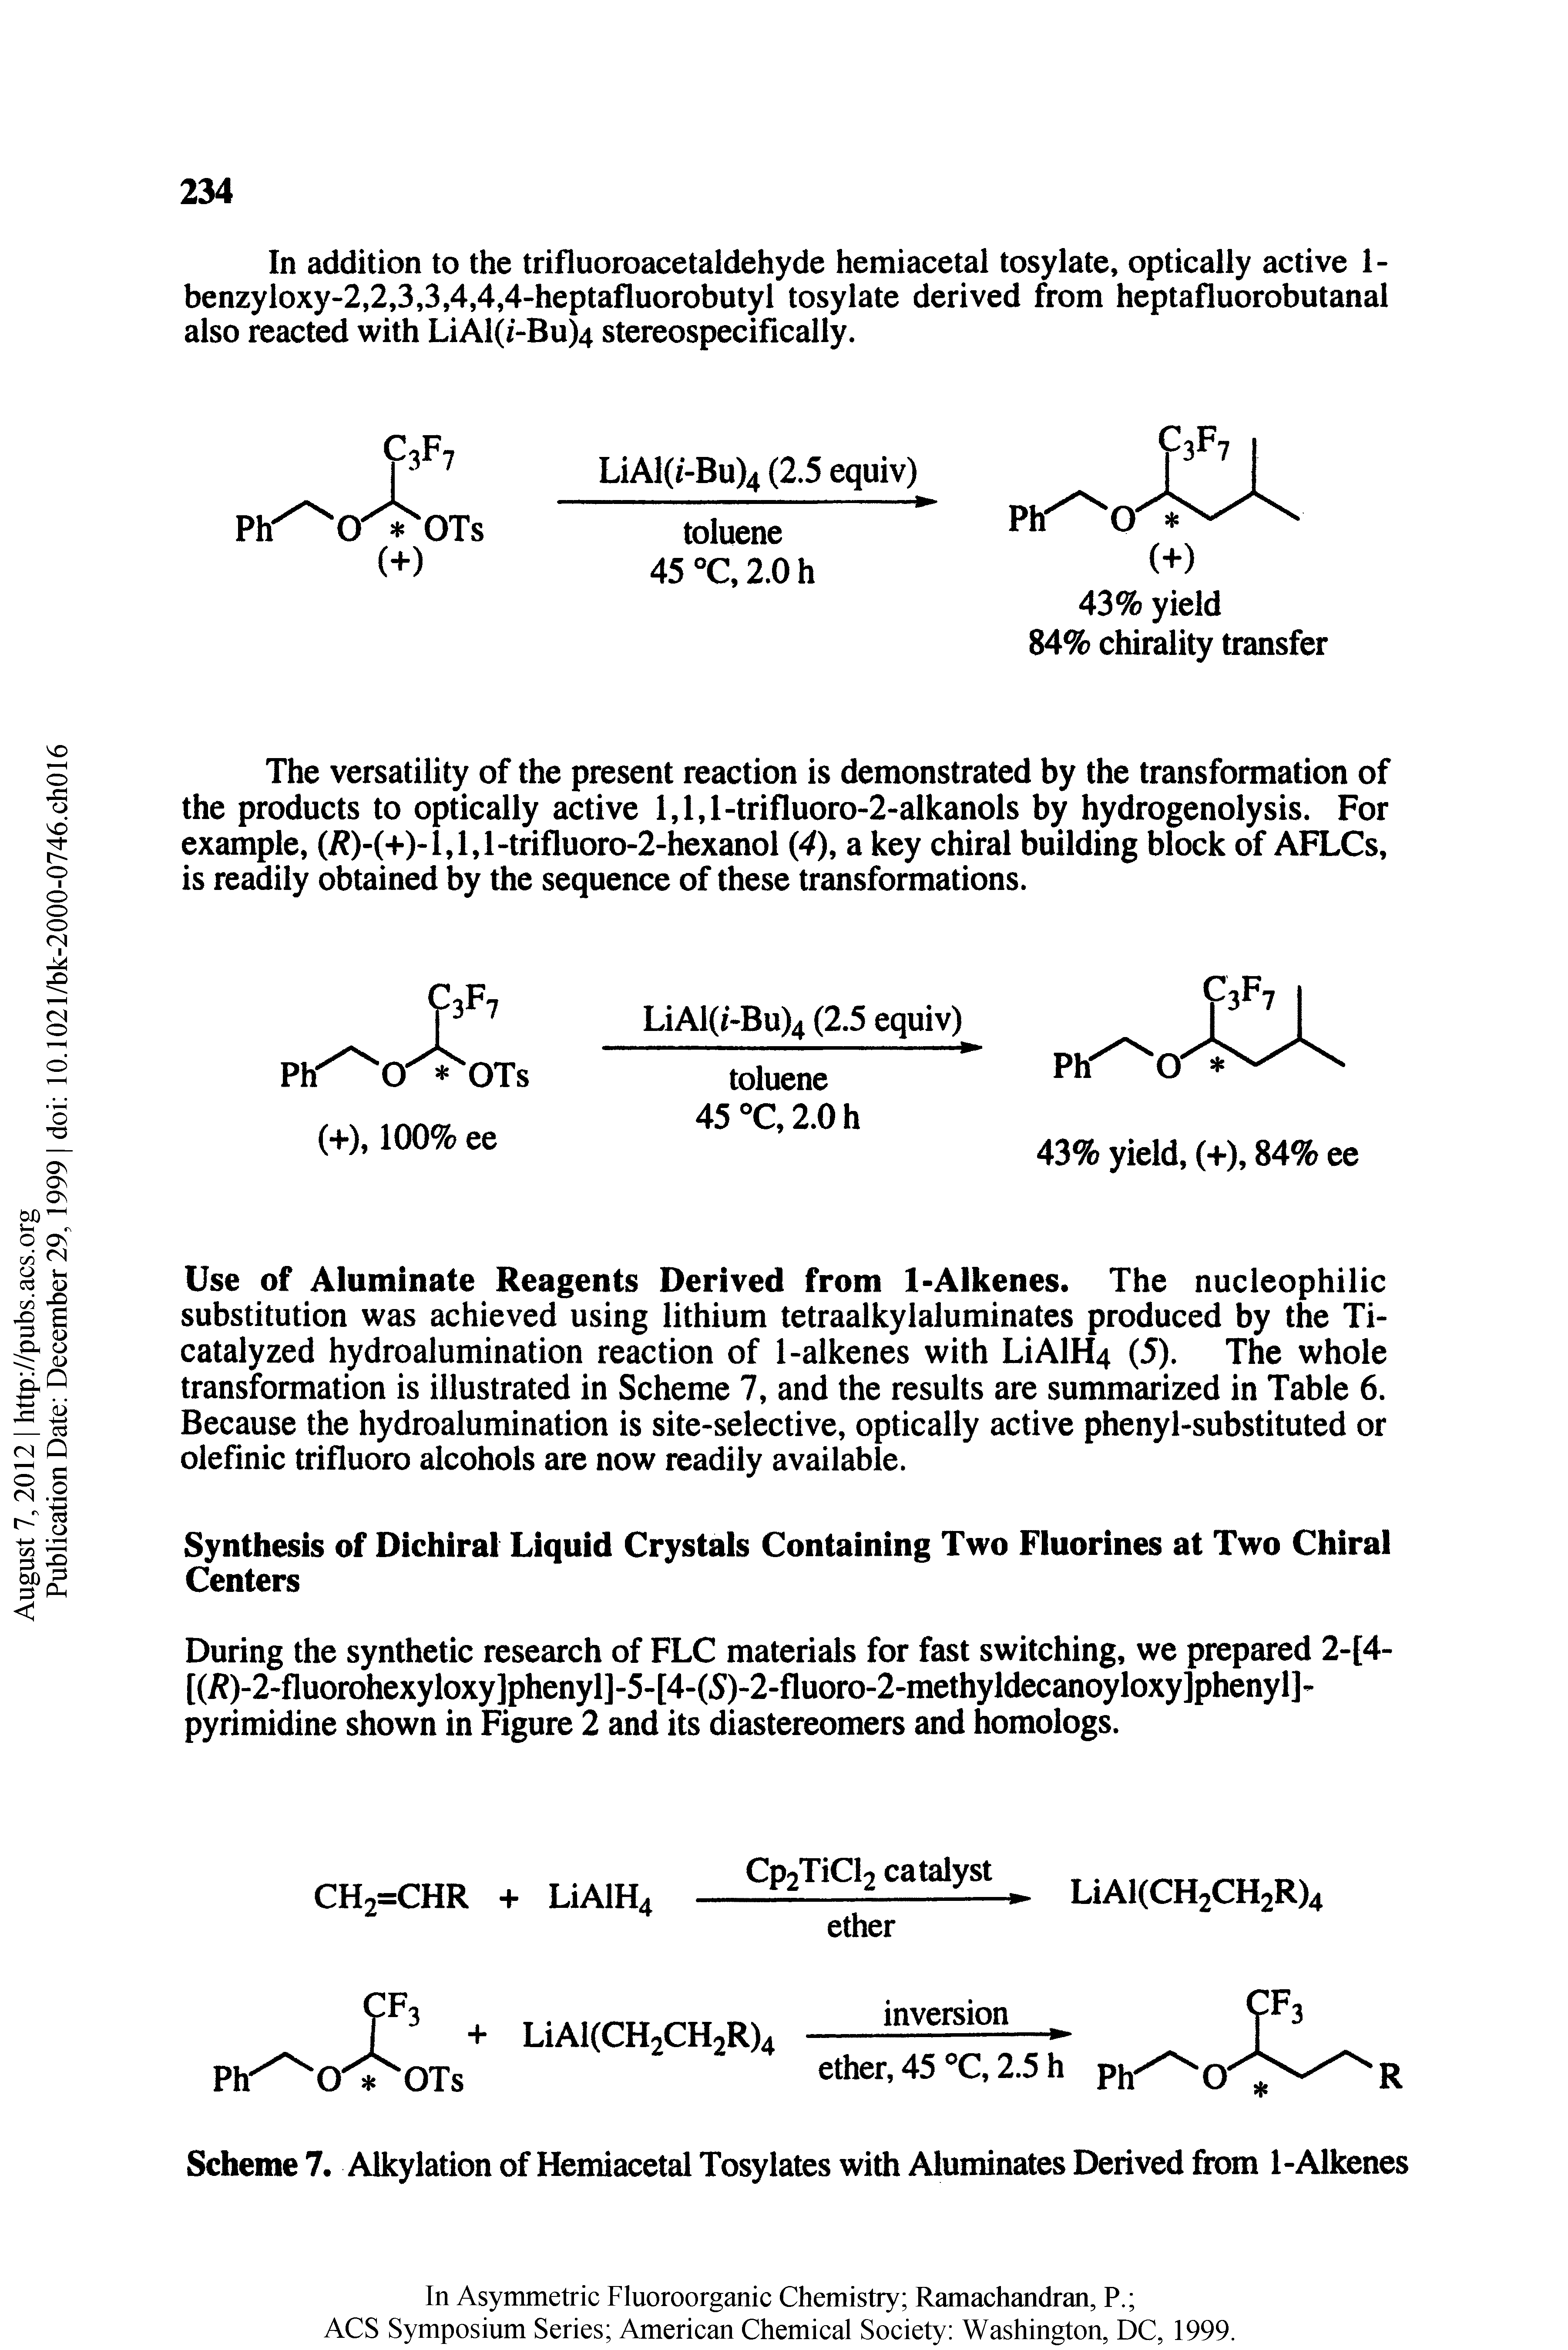 Scheme 7, Alkylation of Hemiacetal Tosylates with Aluminates Derived from 1-Alkenes...